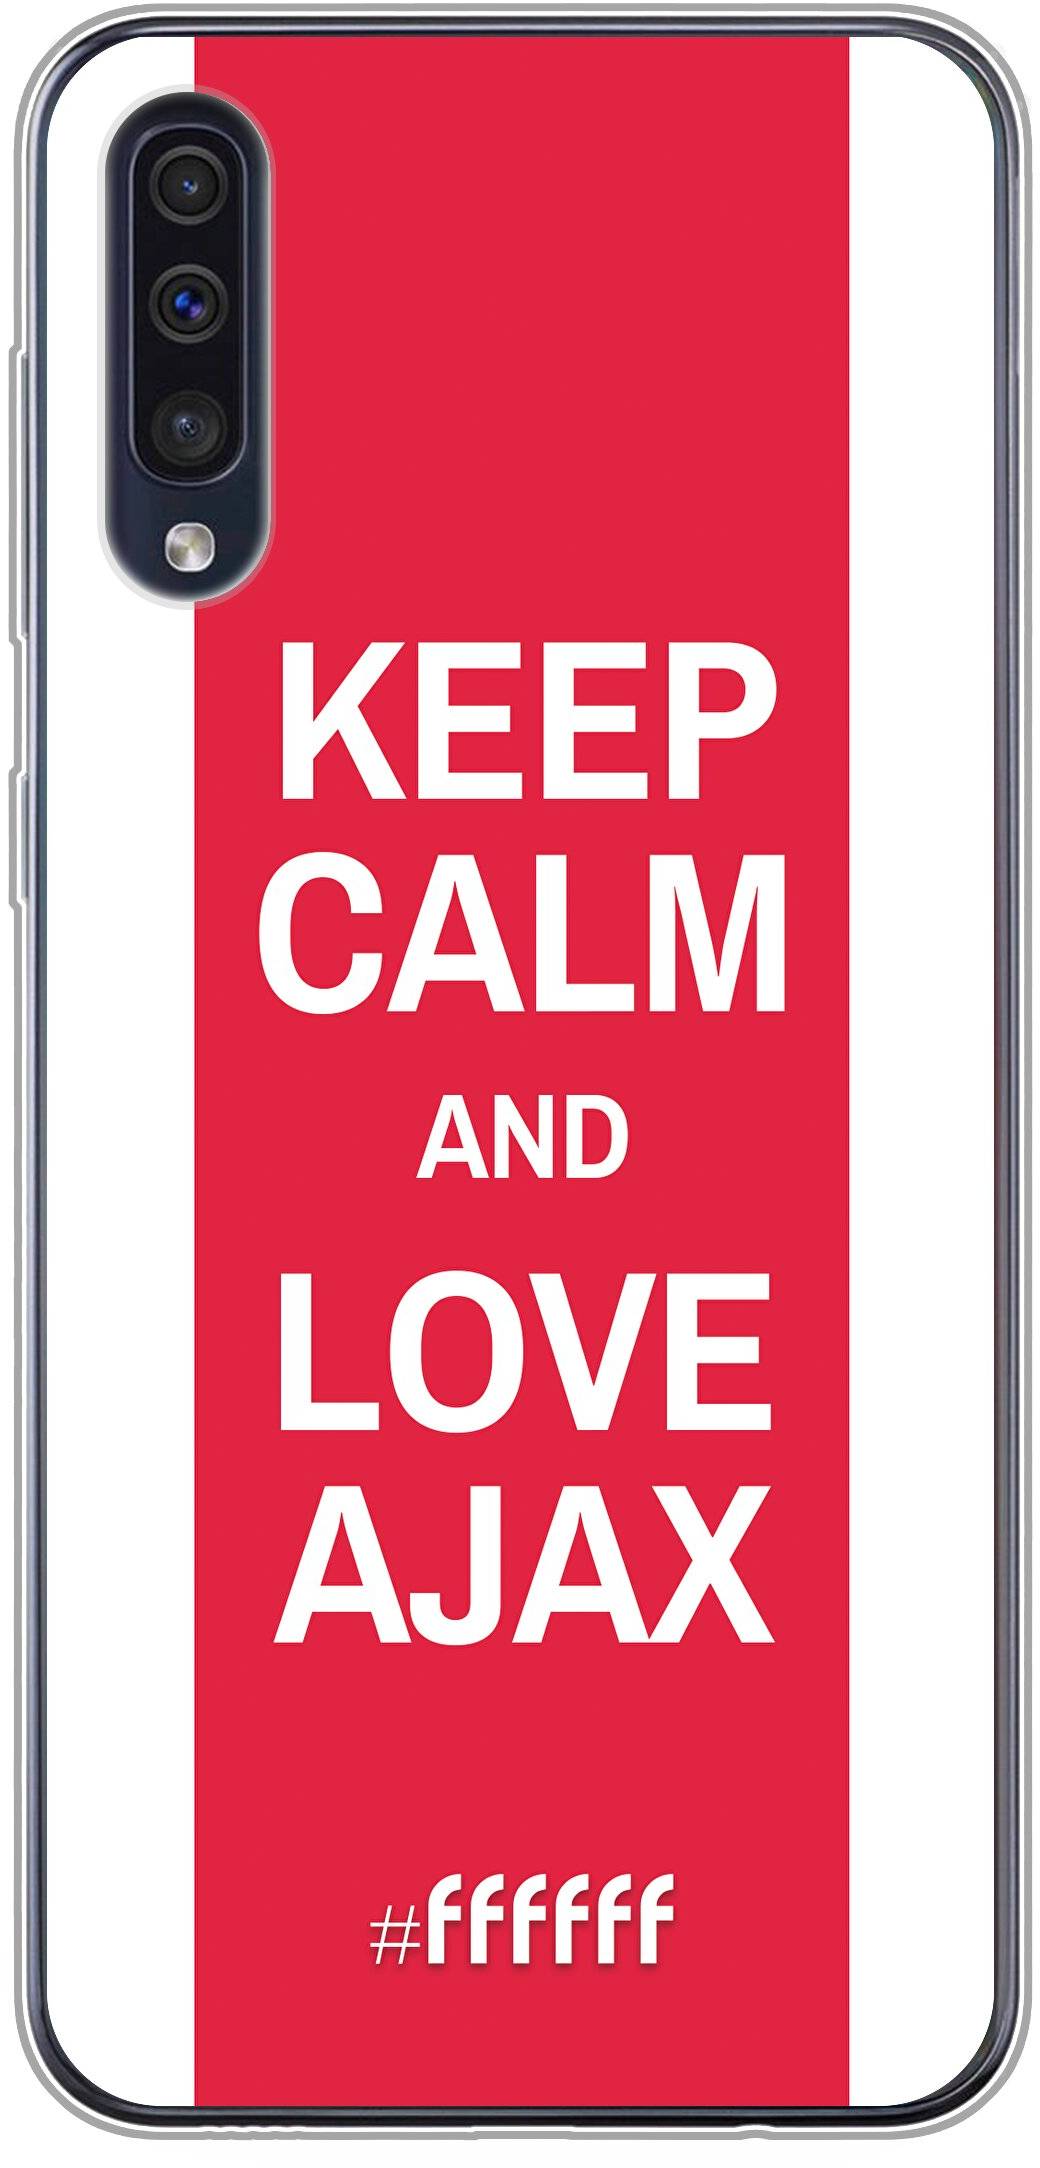 AFC Ajax Keep Calm Galaxy A40